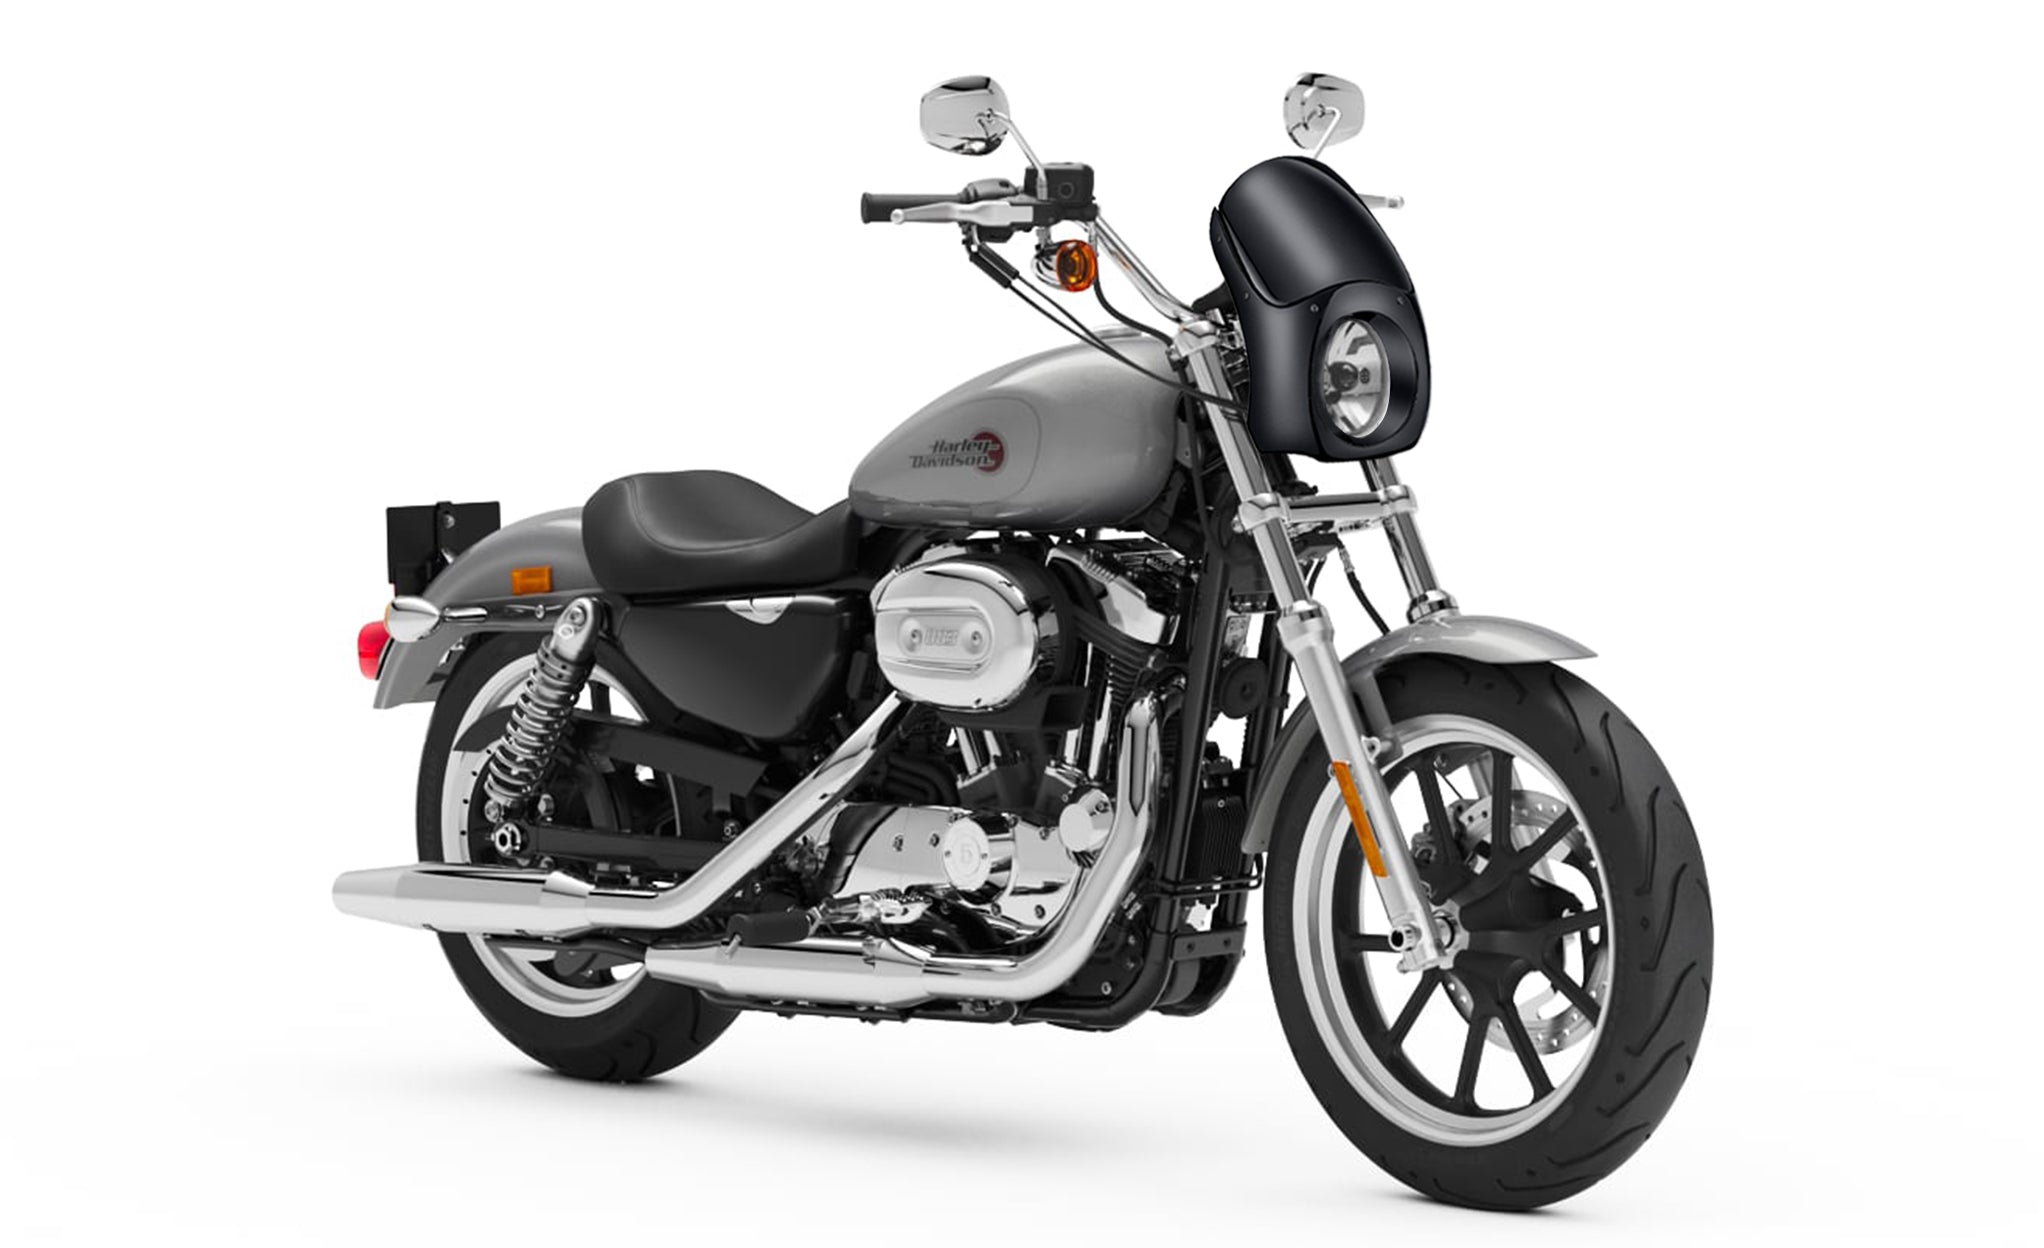 Viking Bronco Motorcycle Fairing For Harley Sportster SuperLow Gloss Black Bag on Bike View @expand